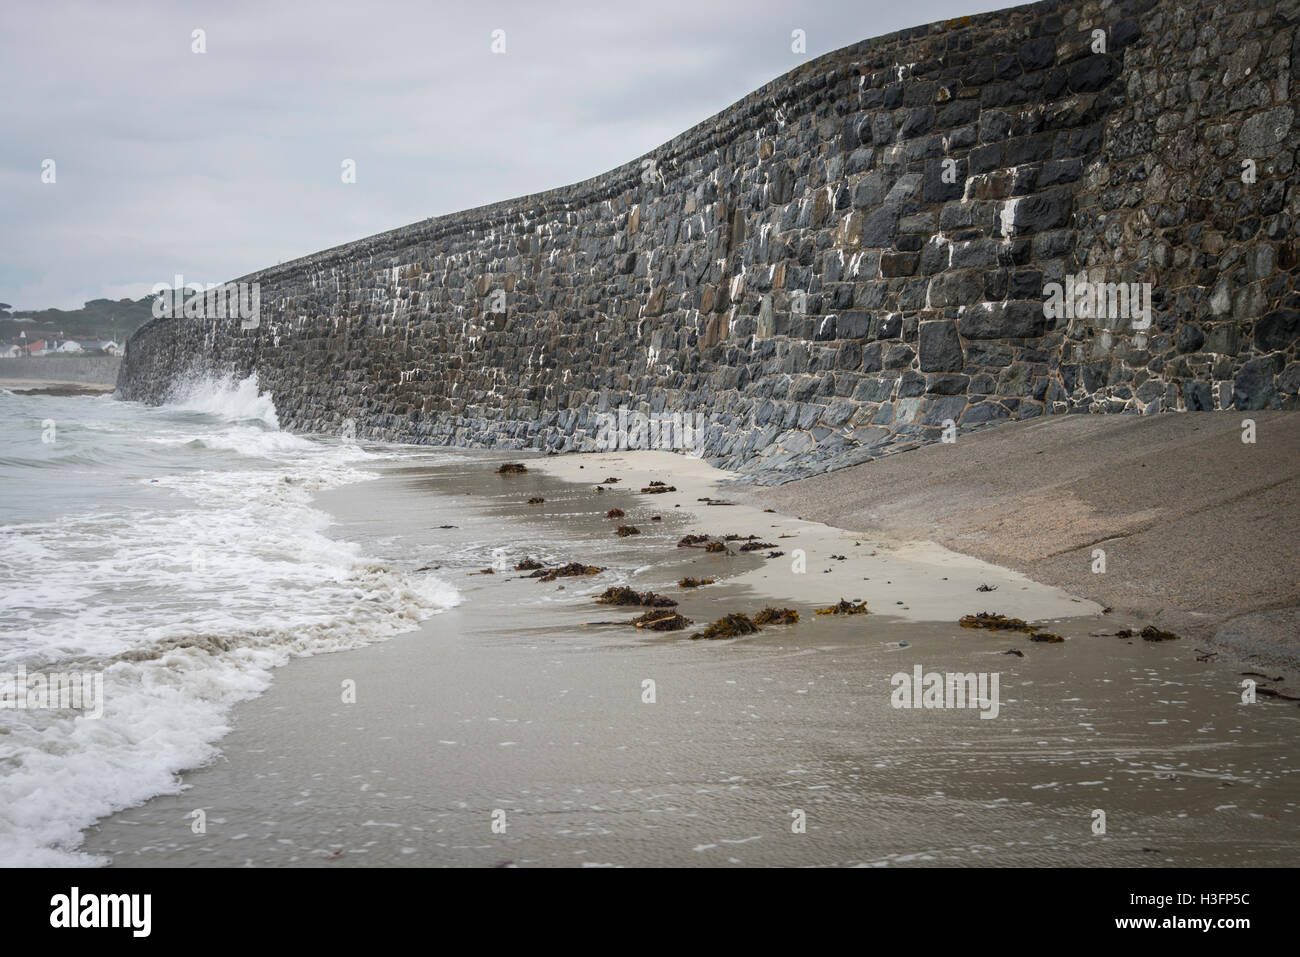 High granite sea wall with waves at base. Stock Photo